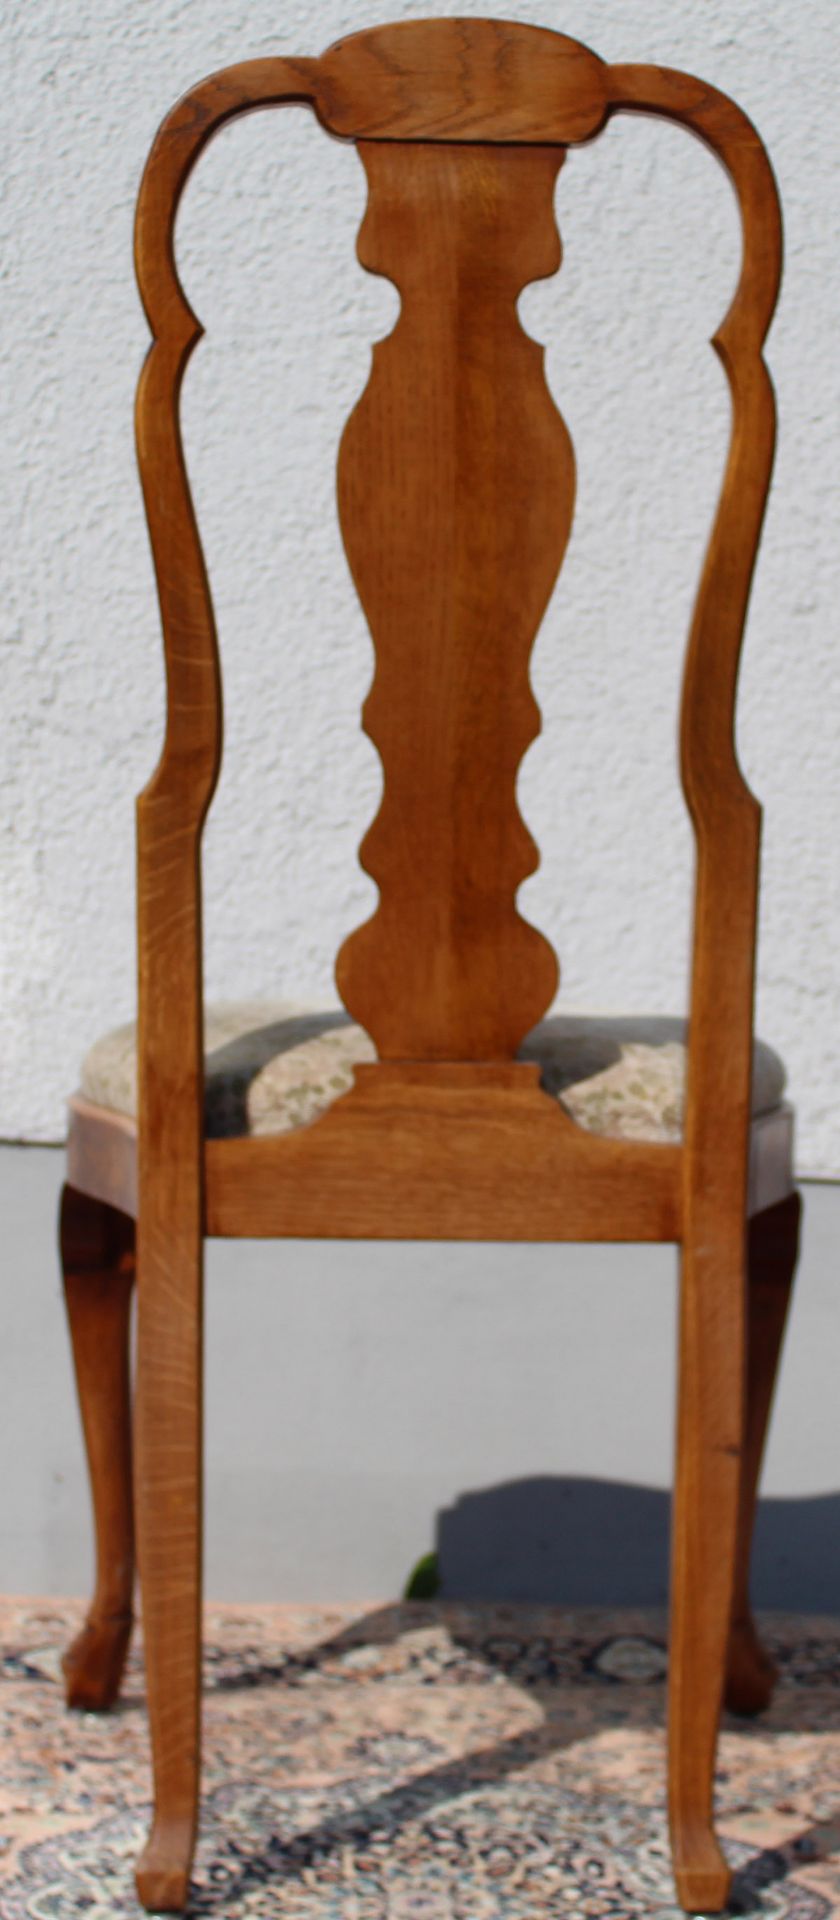 4 Stühle. Ebonisiert. Holland Stil.108(49) cm x 49 cm x 43 cm.4 chairs. Ebonized. Holland style. - Image 3 of 6